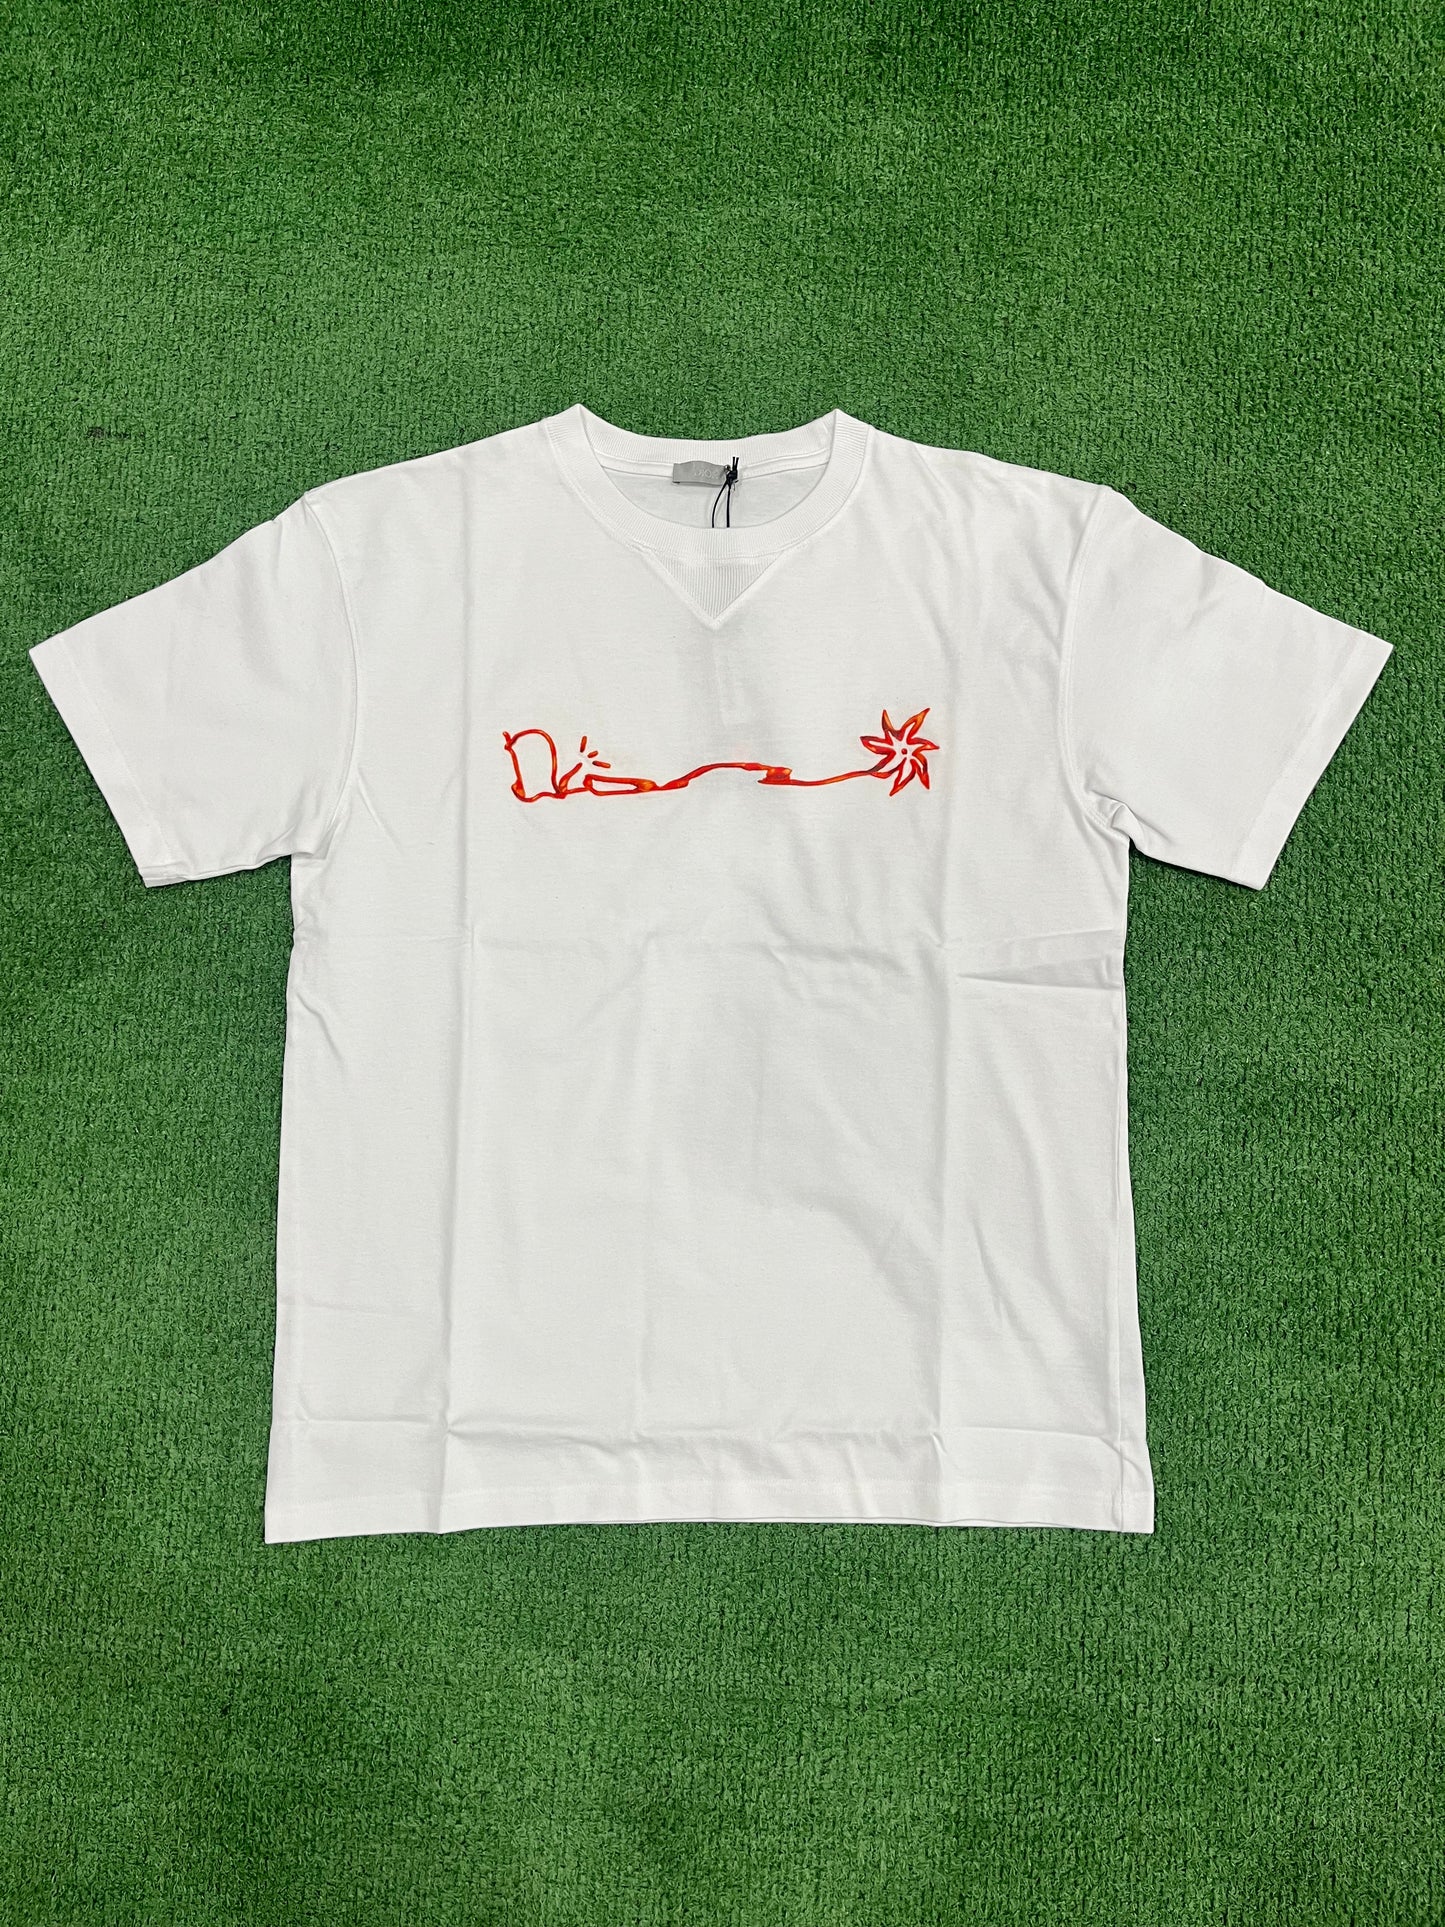 Dior x Cactus Jack Oversized T-shirt White/Red